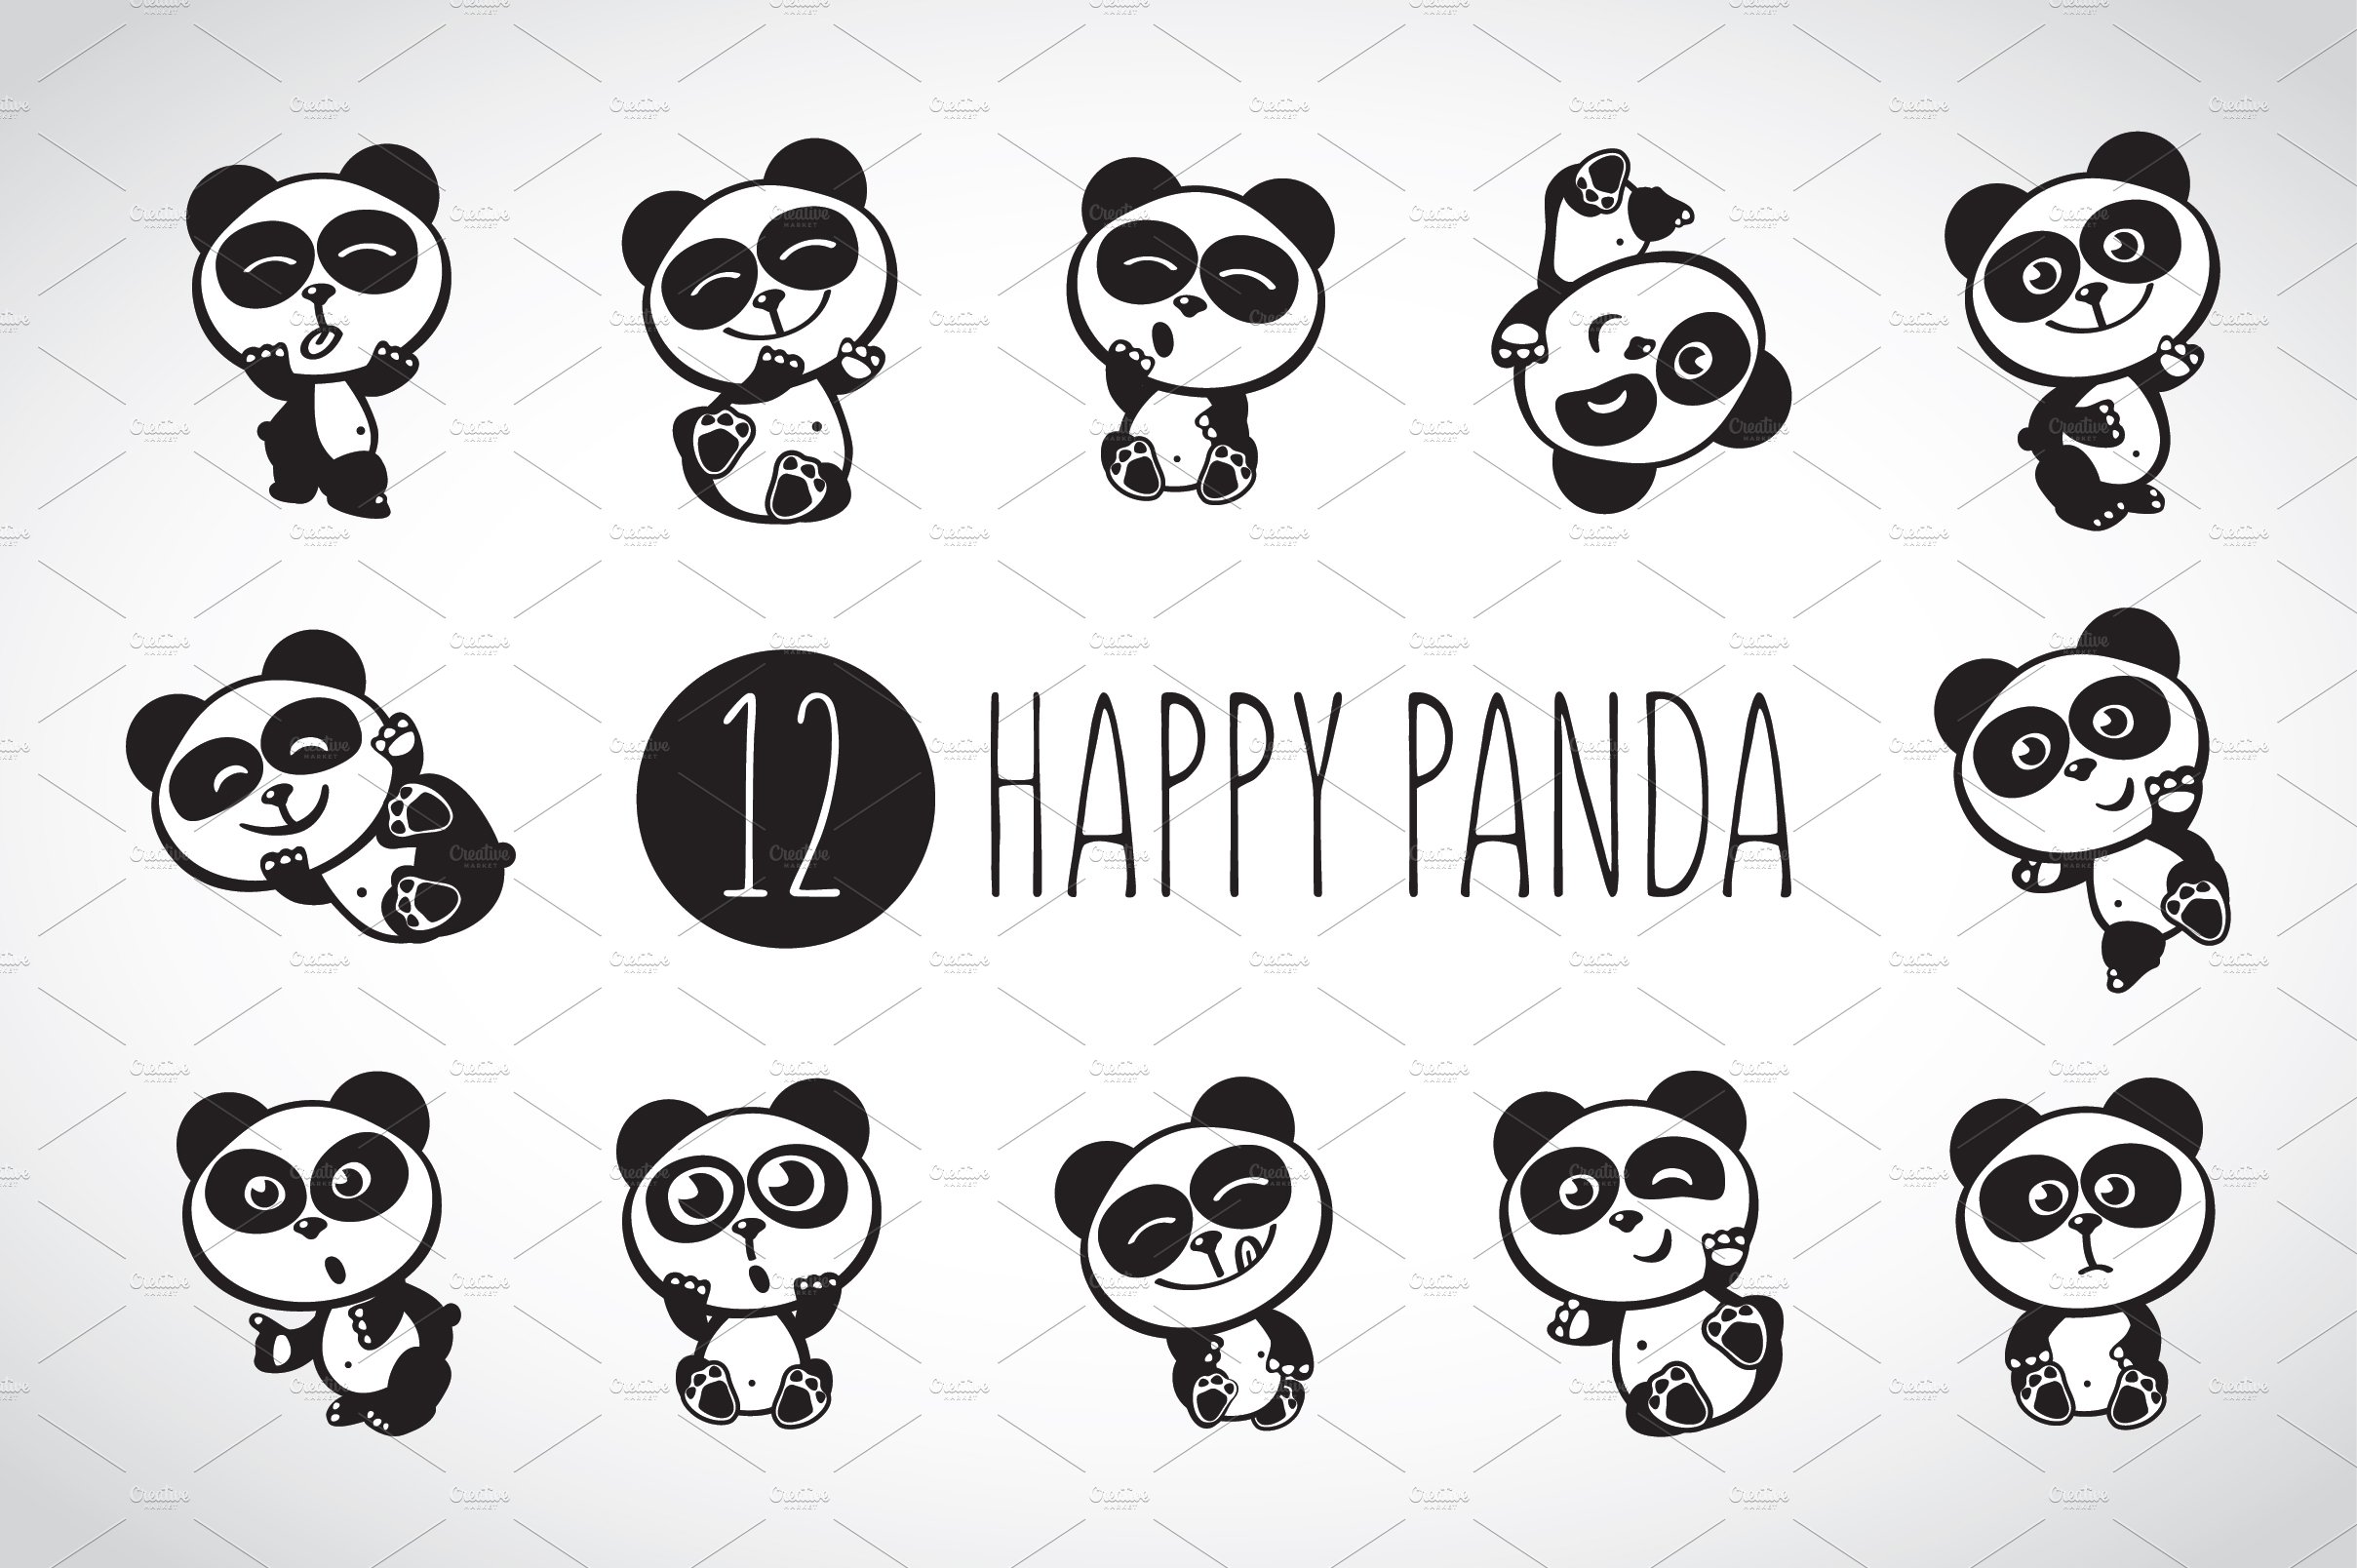 Happy panda (2 sets + 4 pattern) cover image.